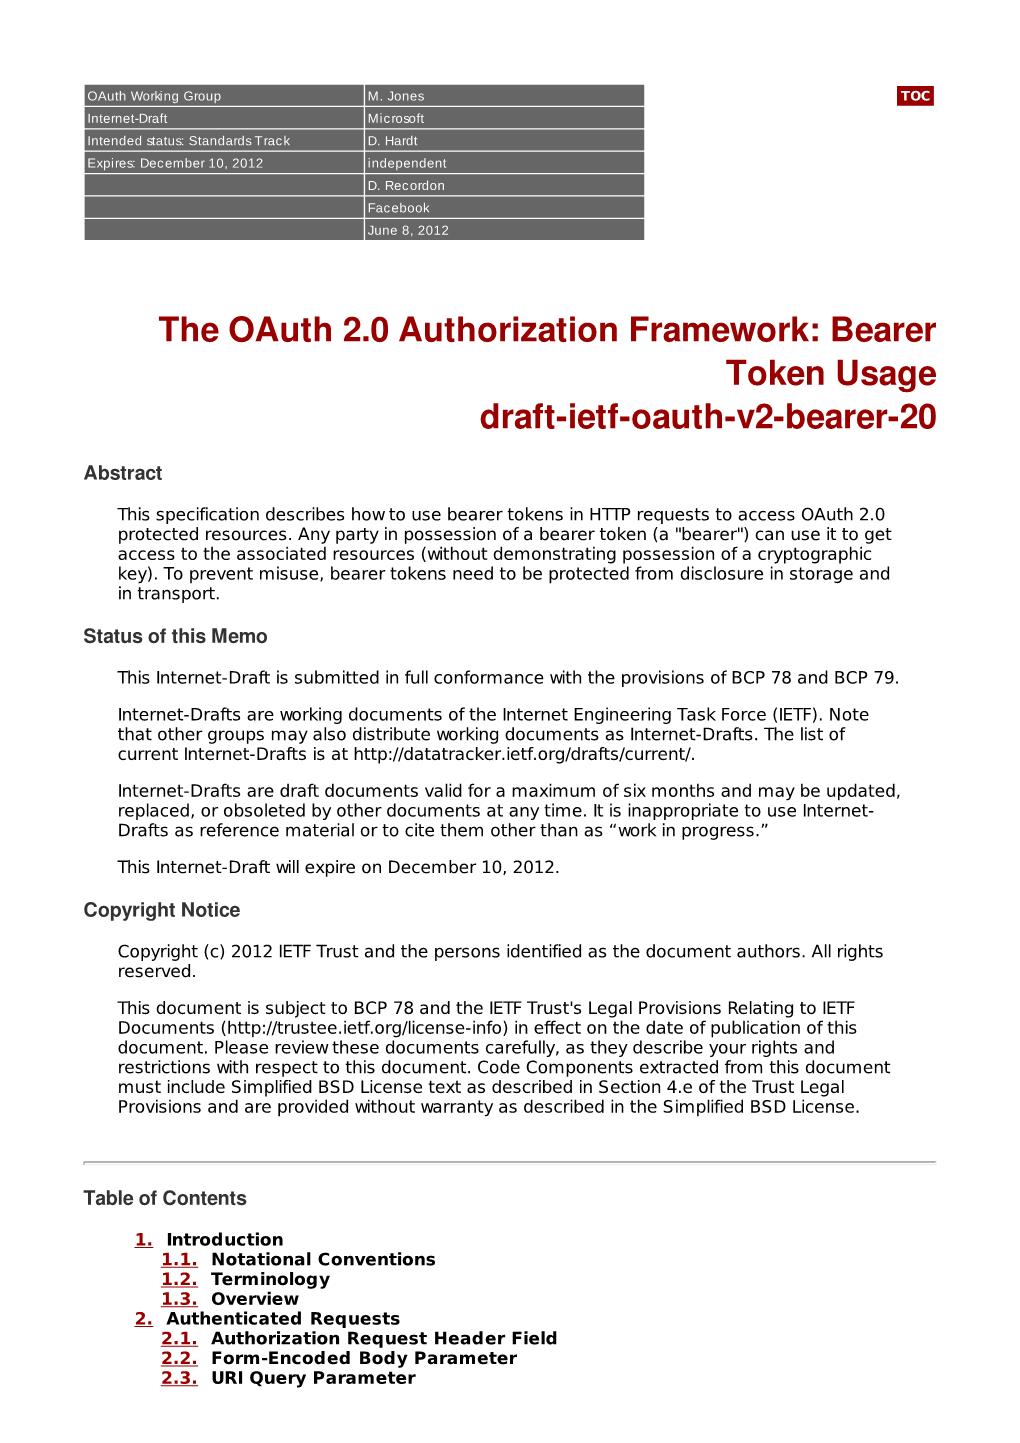 The Oauth 2.0 Authorization Framework: Bearer Token Usage Draft-Ietf-Oauth-V2-Bearer-20